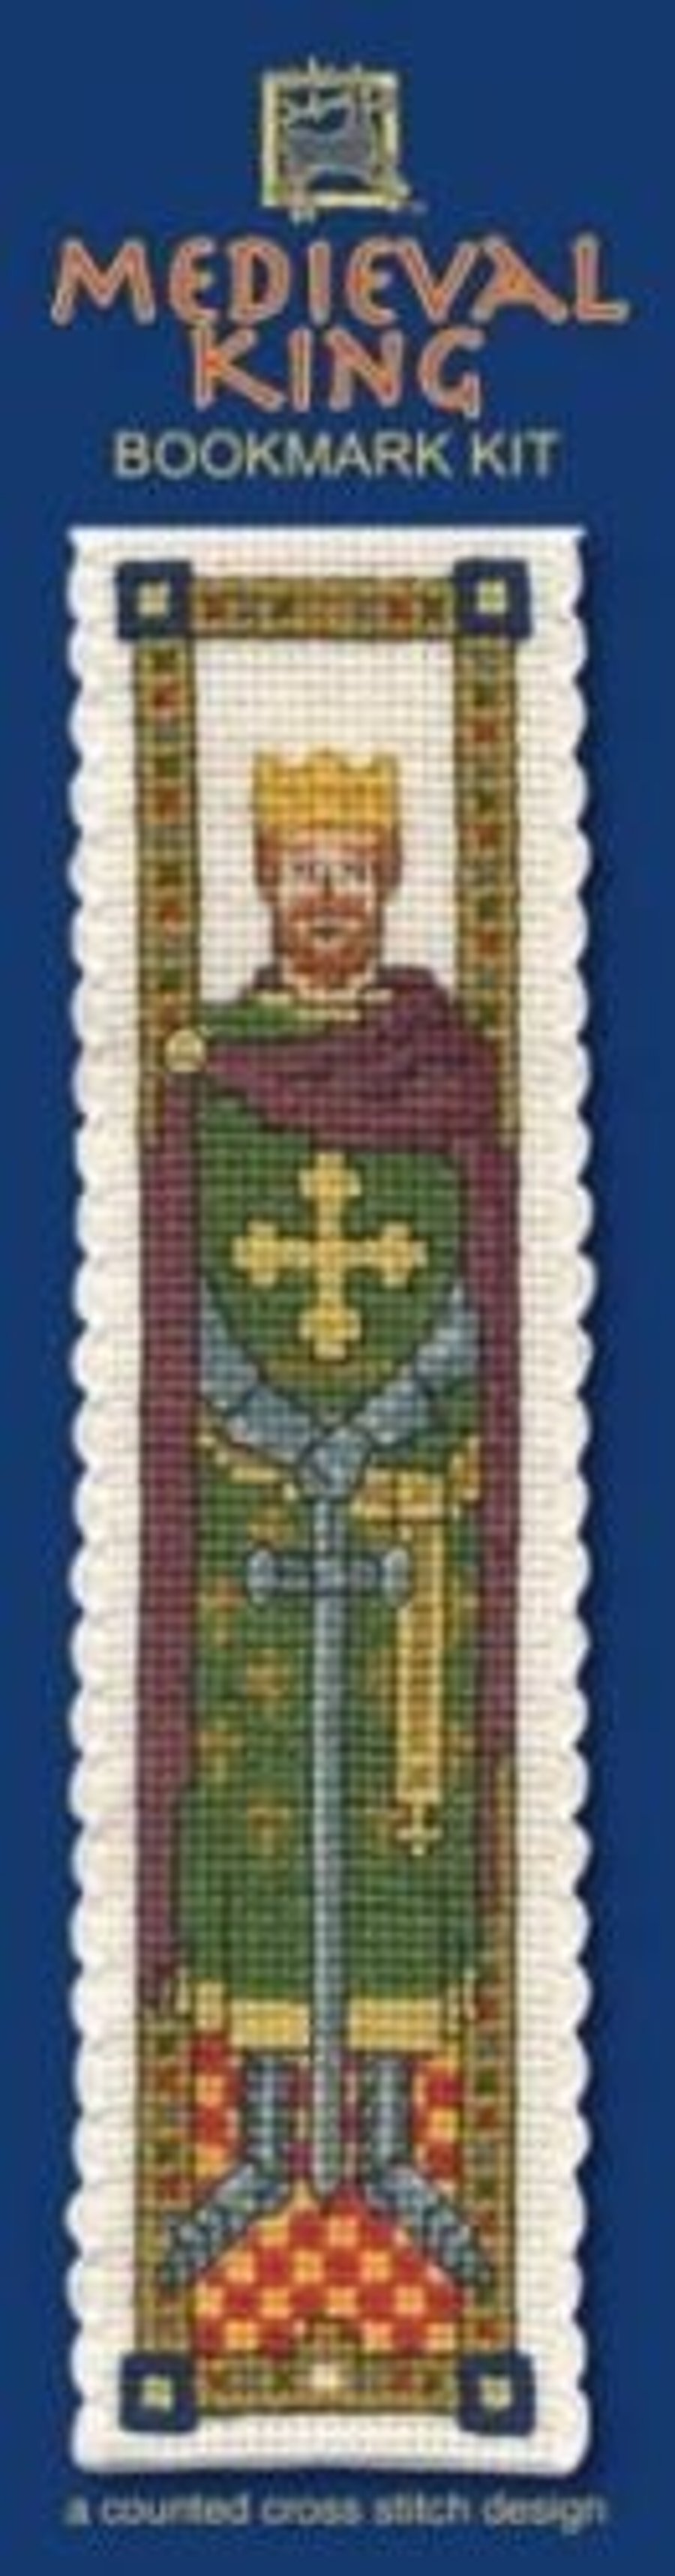 Medieval King Bookmark Cross Stitch Kit - Textile Heritage